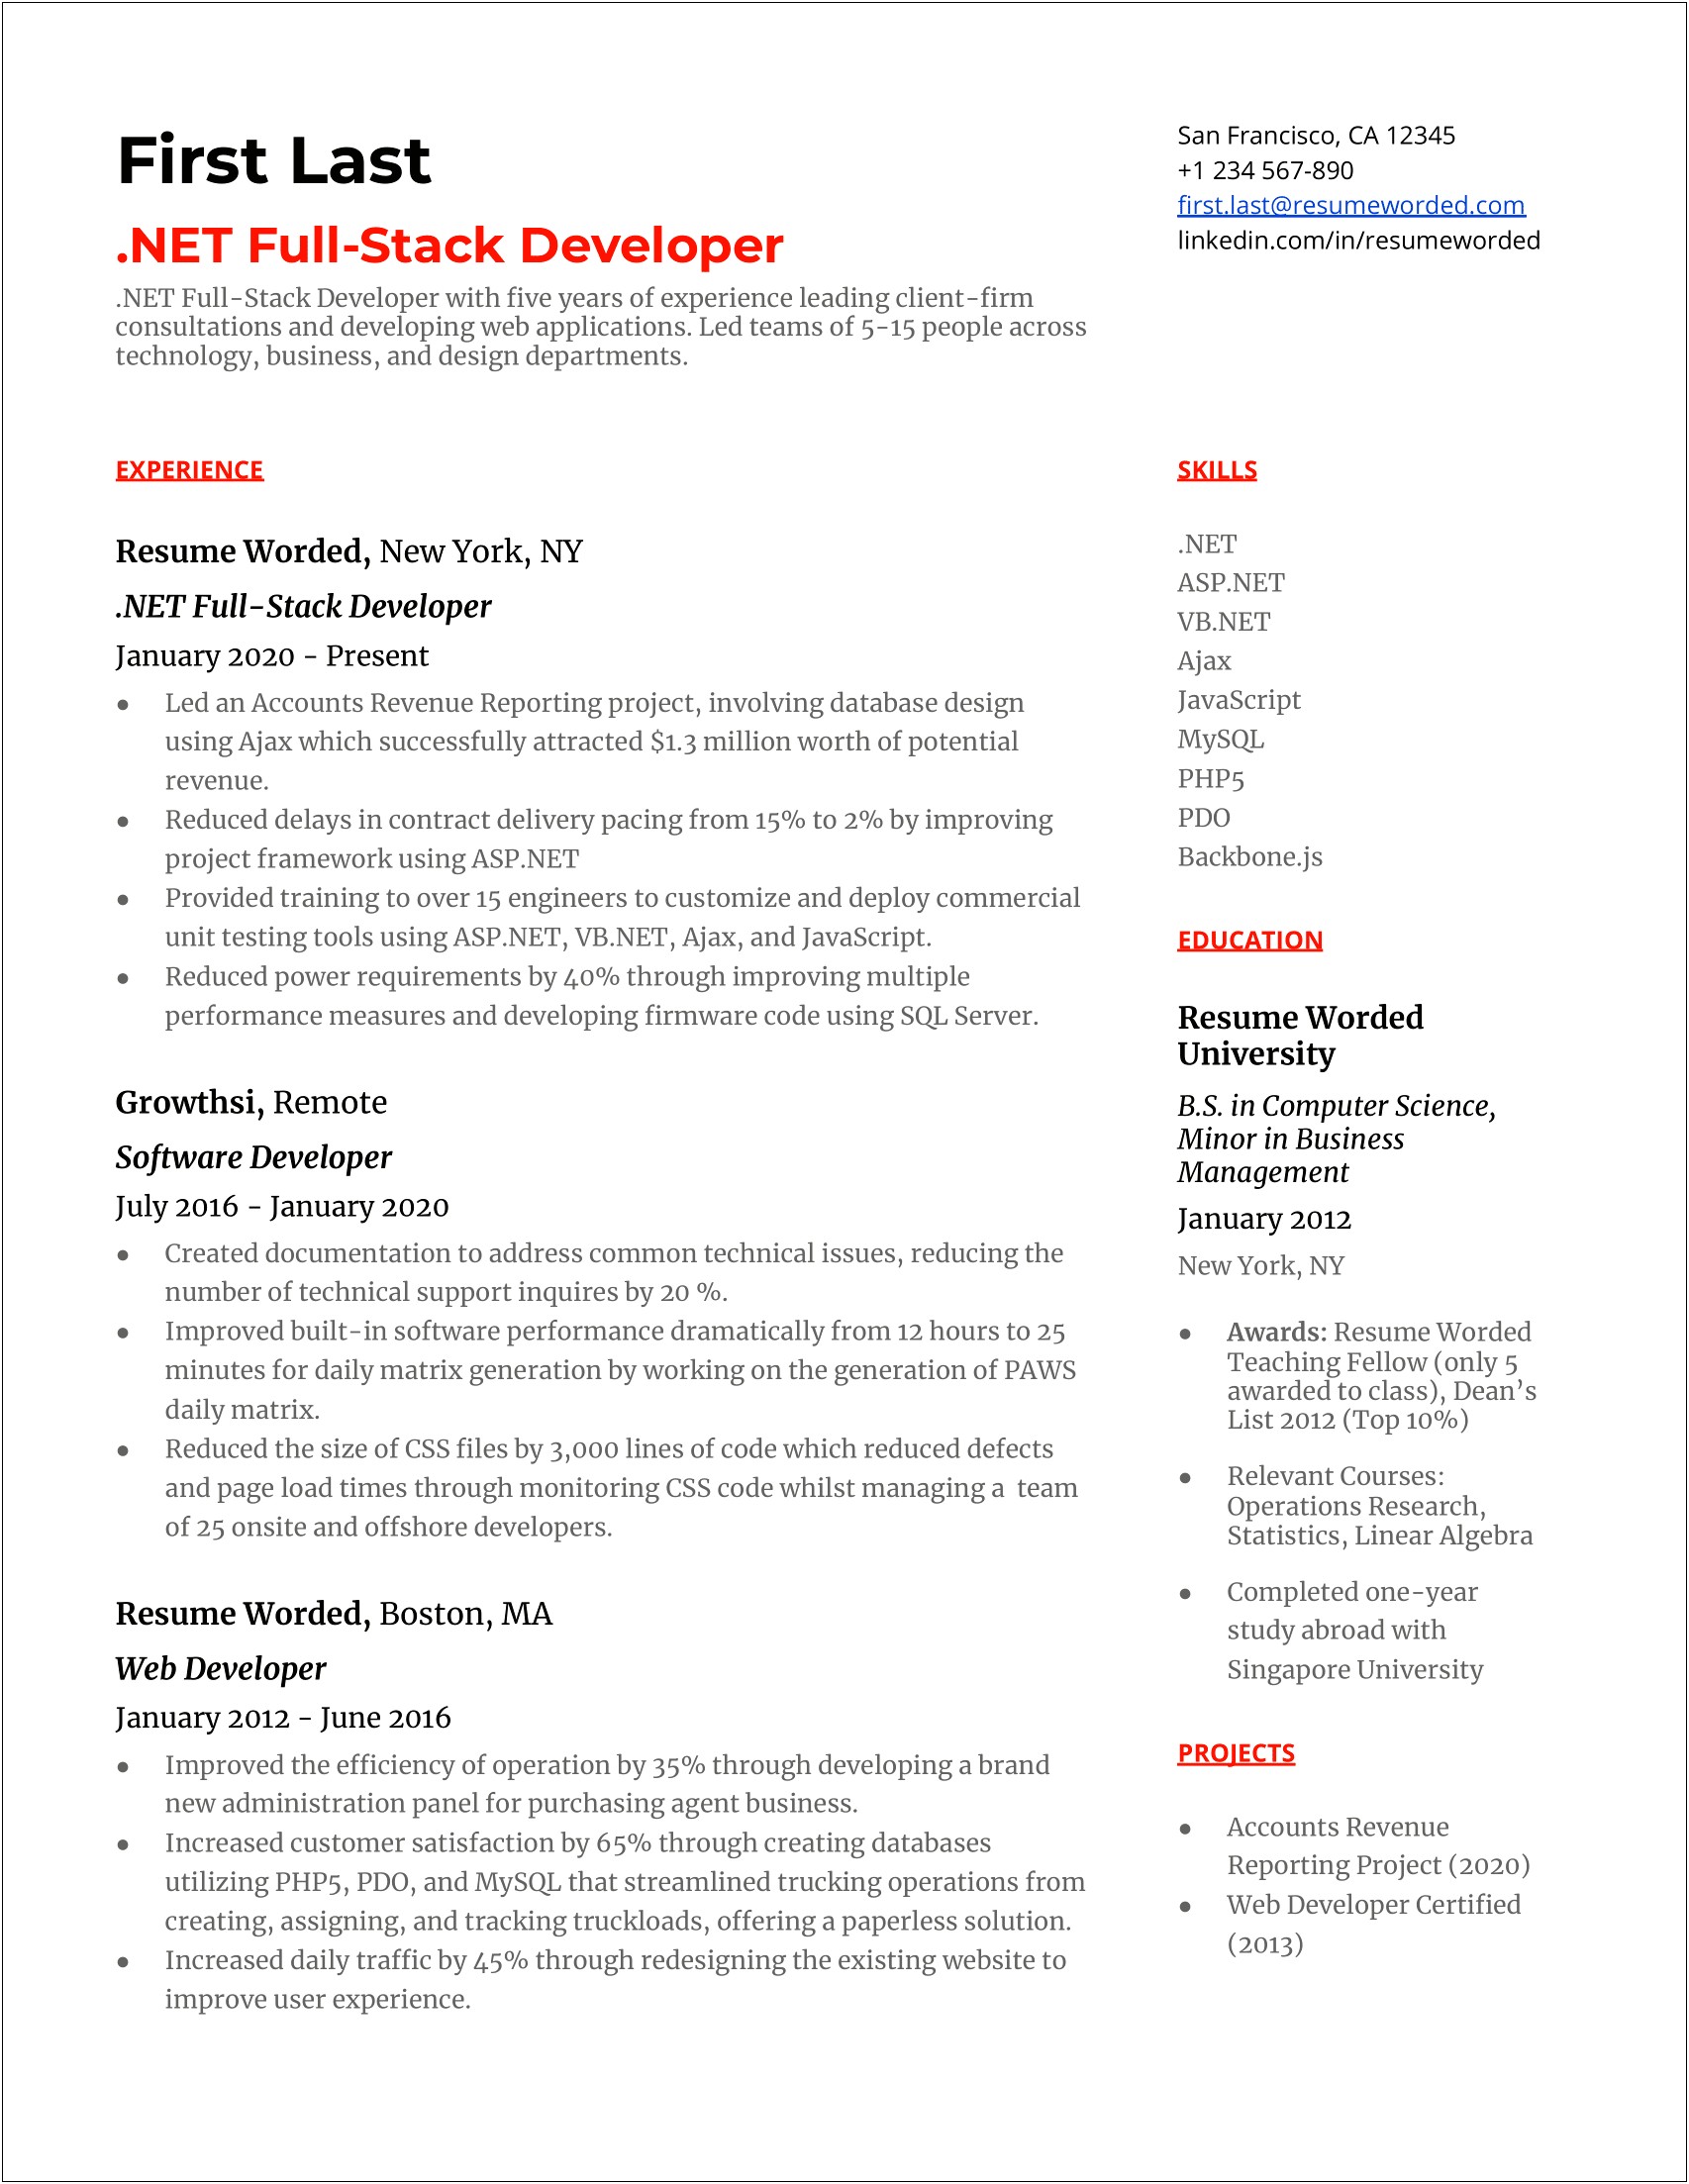 Job Skills List For Resume Website